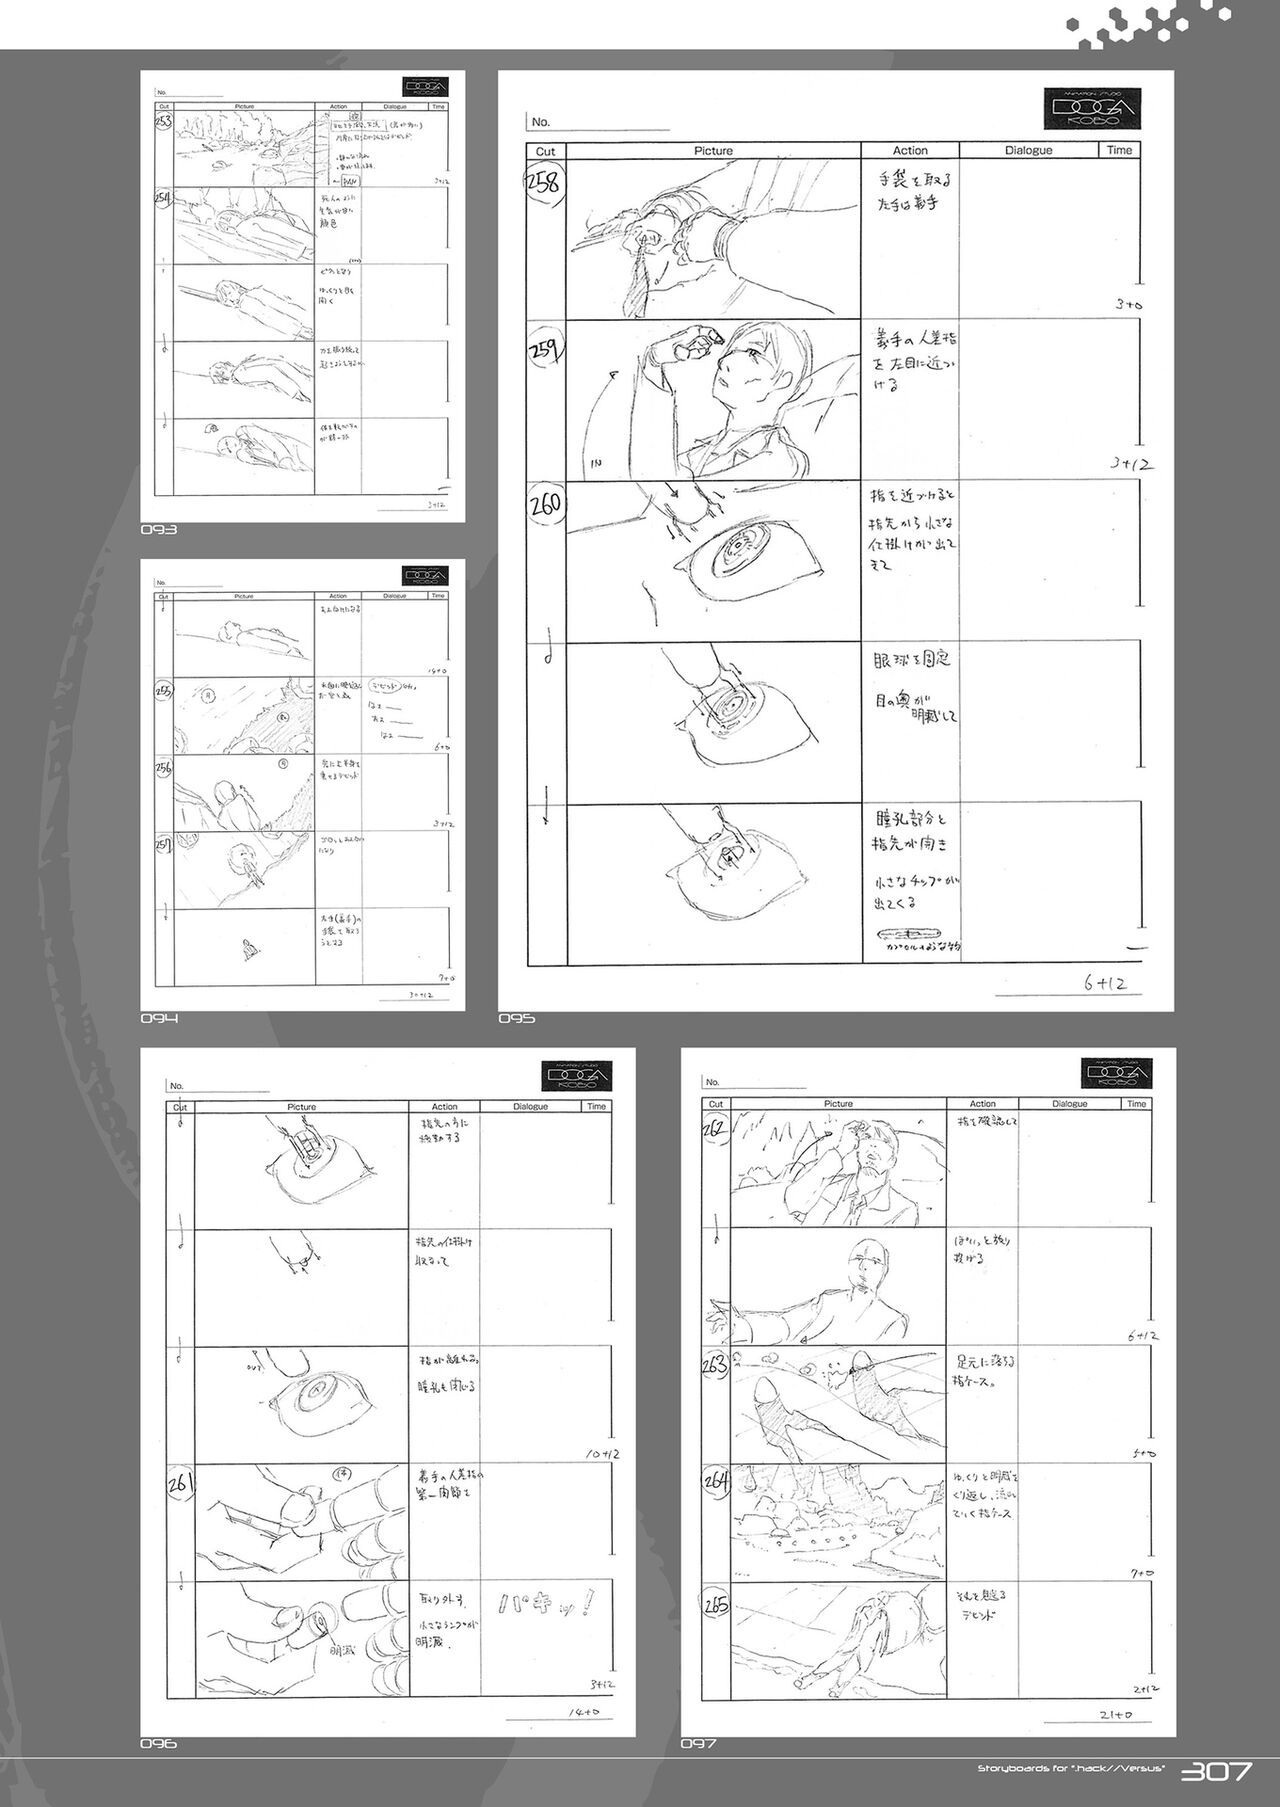 Dot Hack Sekai-no Muko ni  +Versus Complete Set  Documentation .hack //Archives _ 05 309